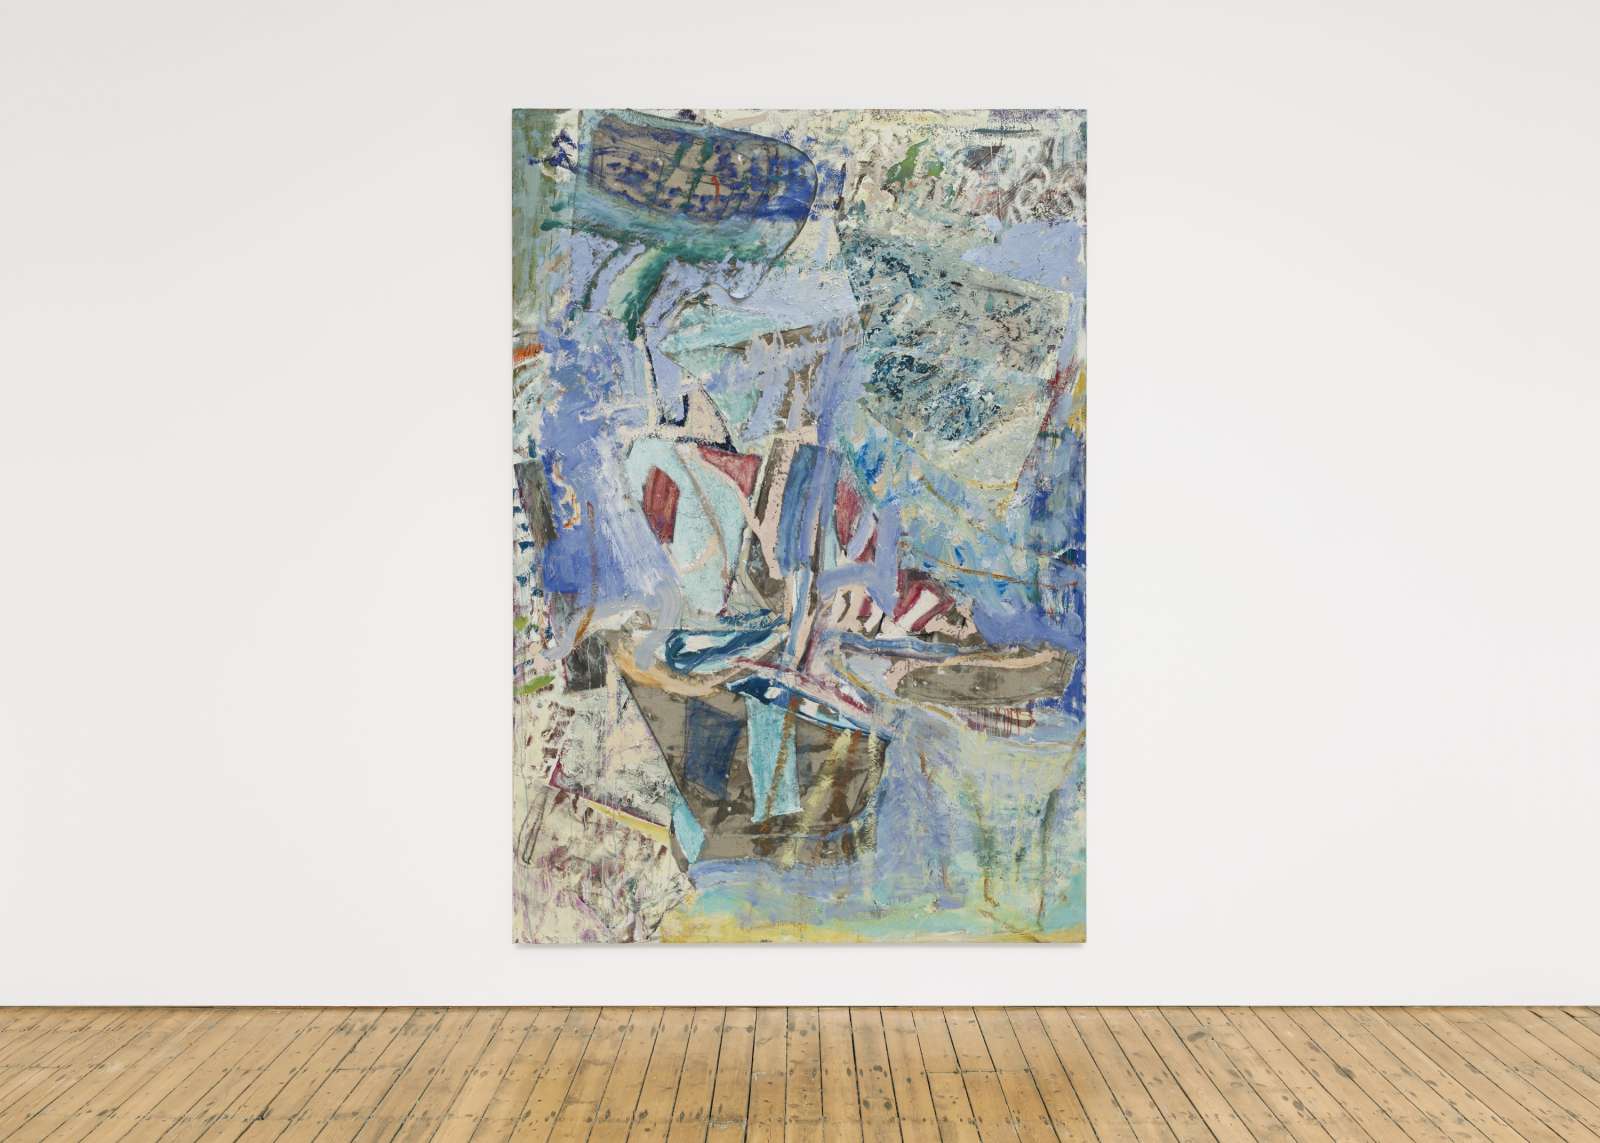 Pam Evelyn, Routine escape, 2022. Oil on linen, 300 x 200 cm